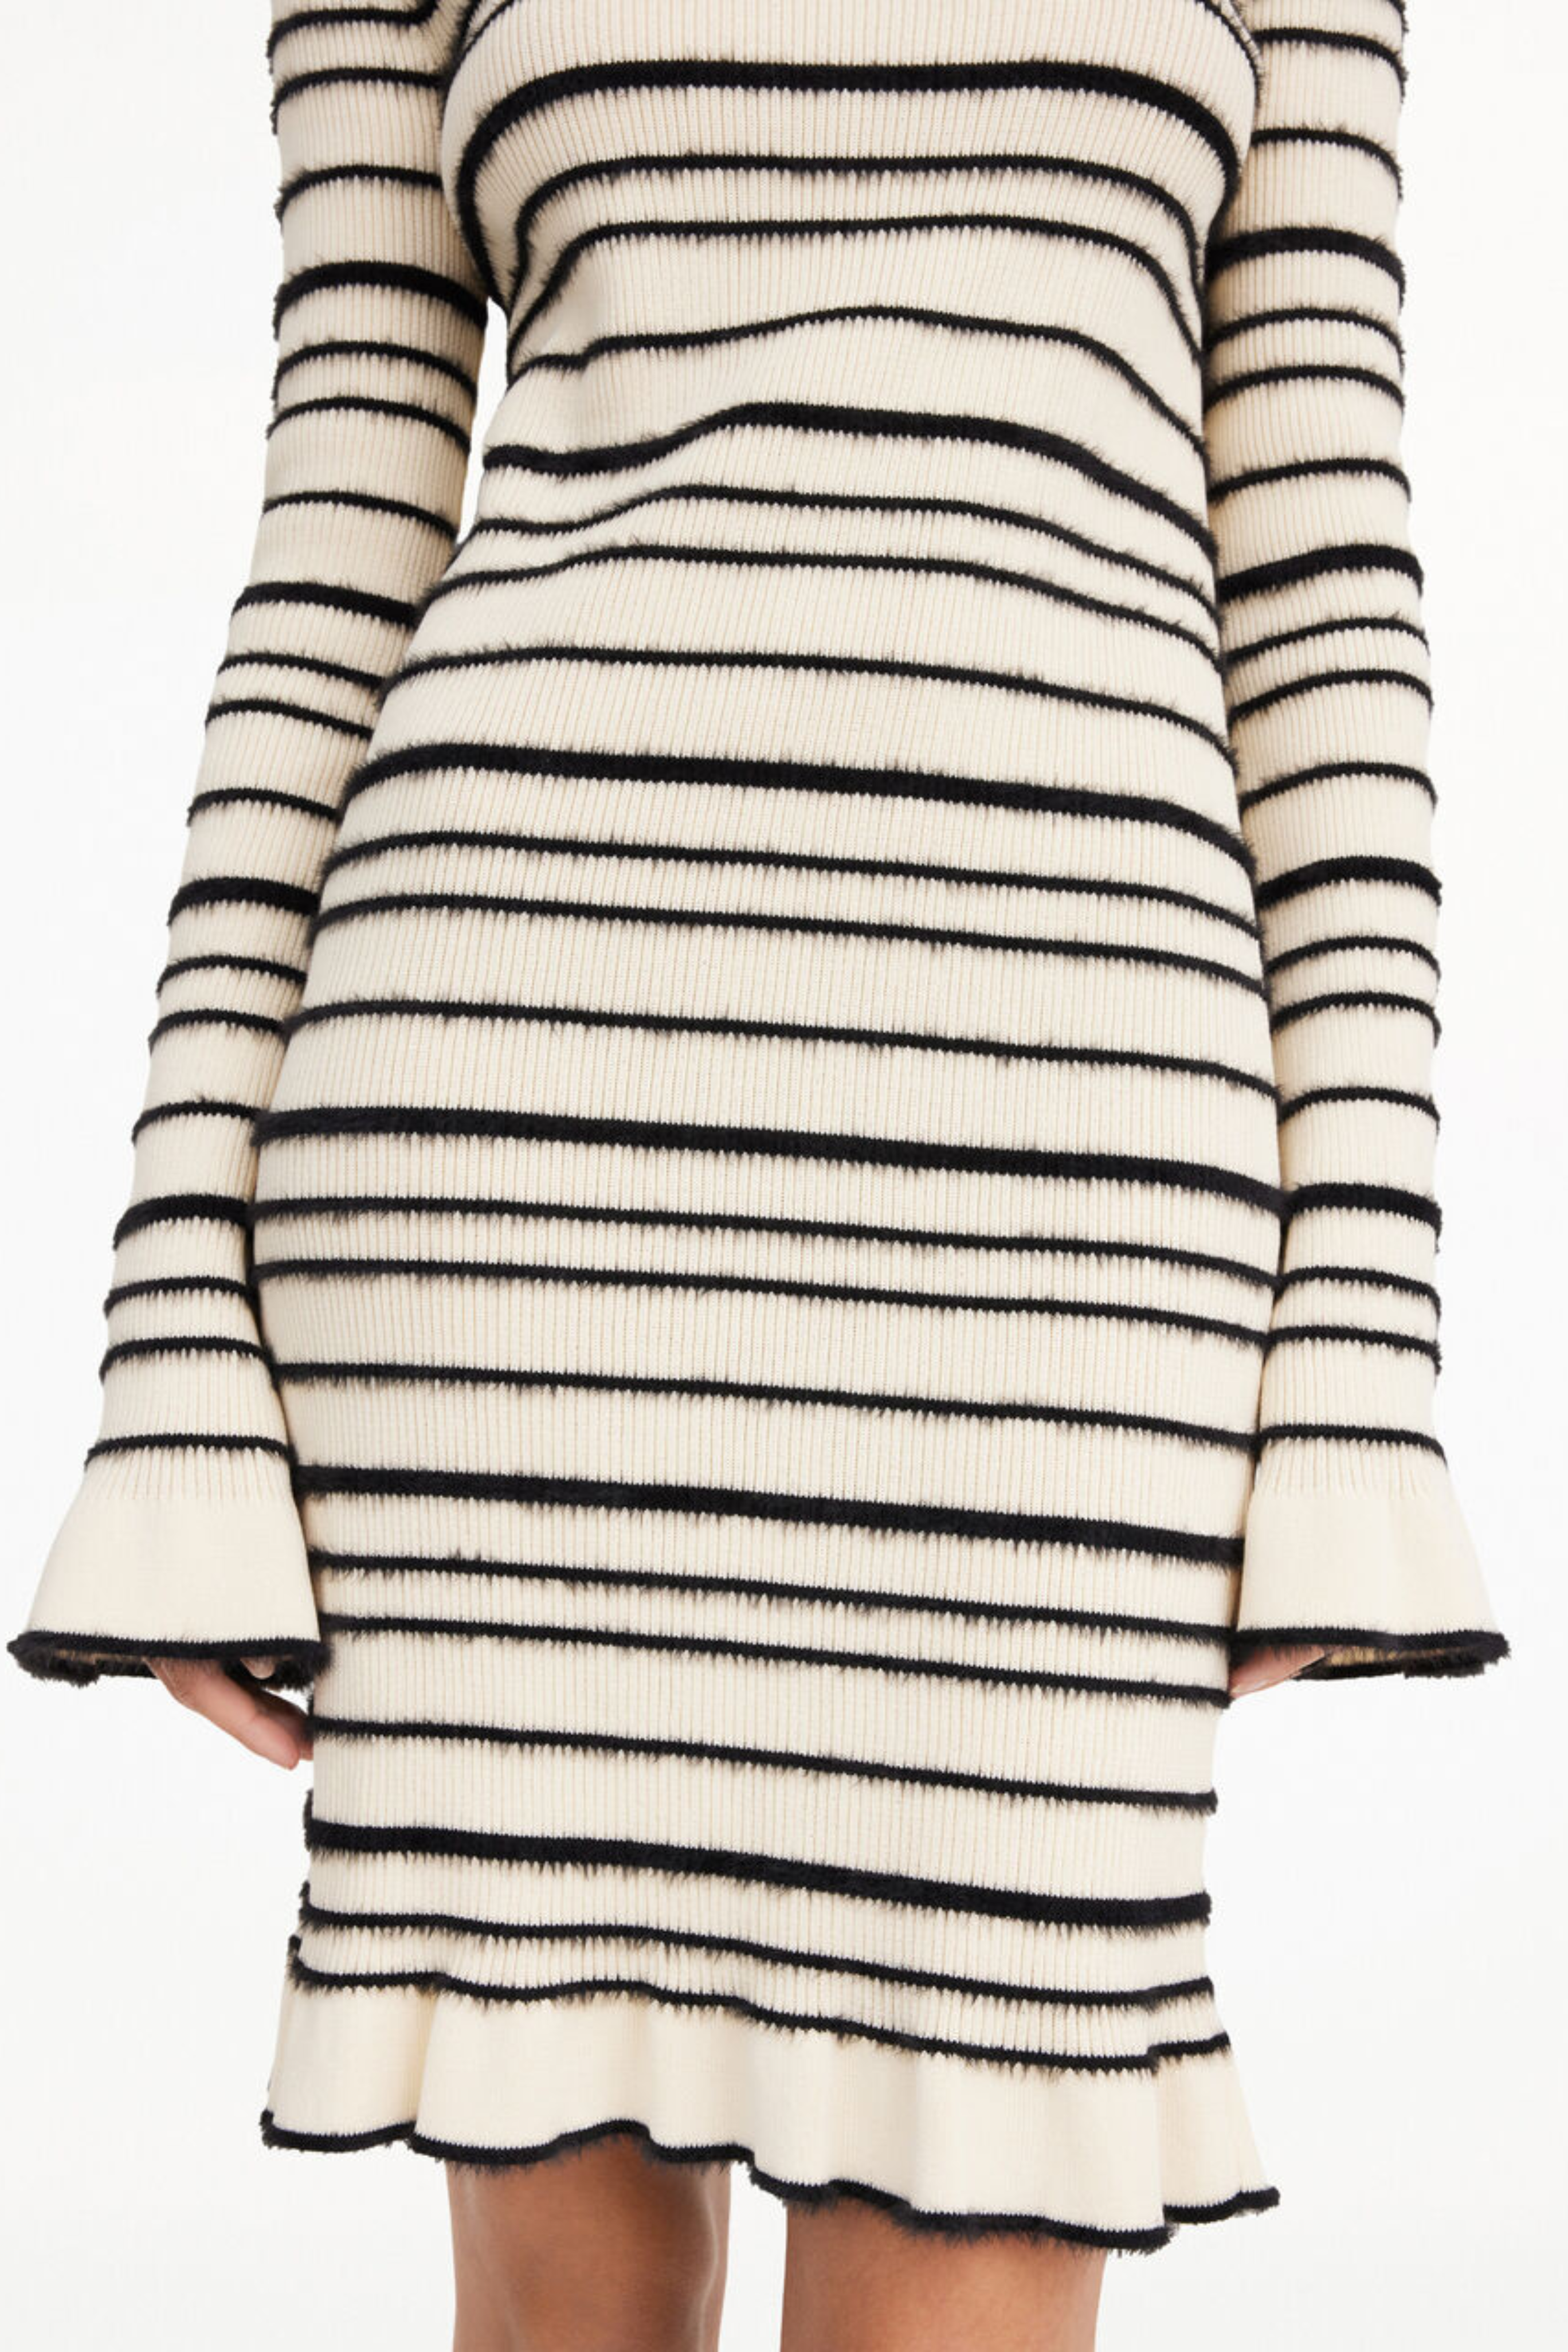 BY MALENE BIRGER Long Sleeve Mailey Stripe Knit Dress